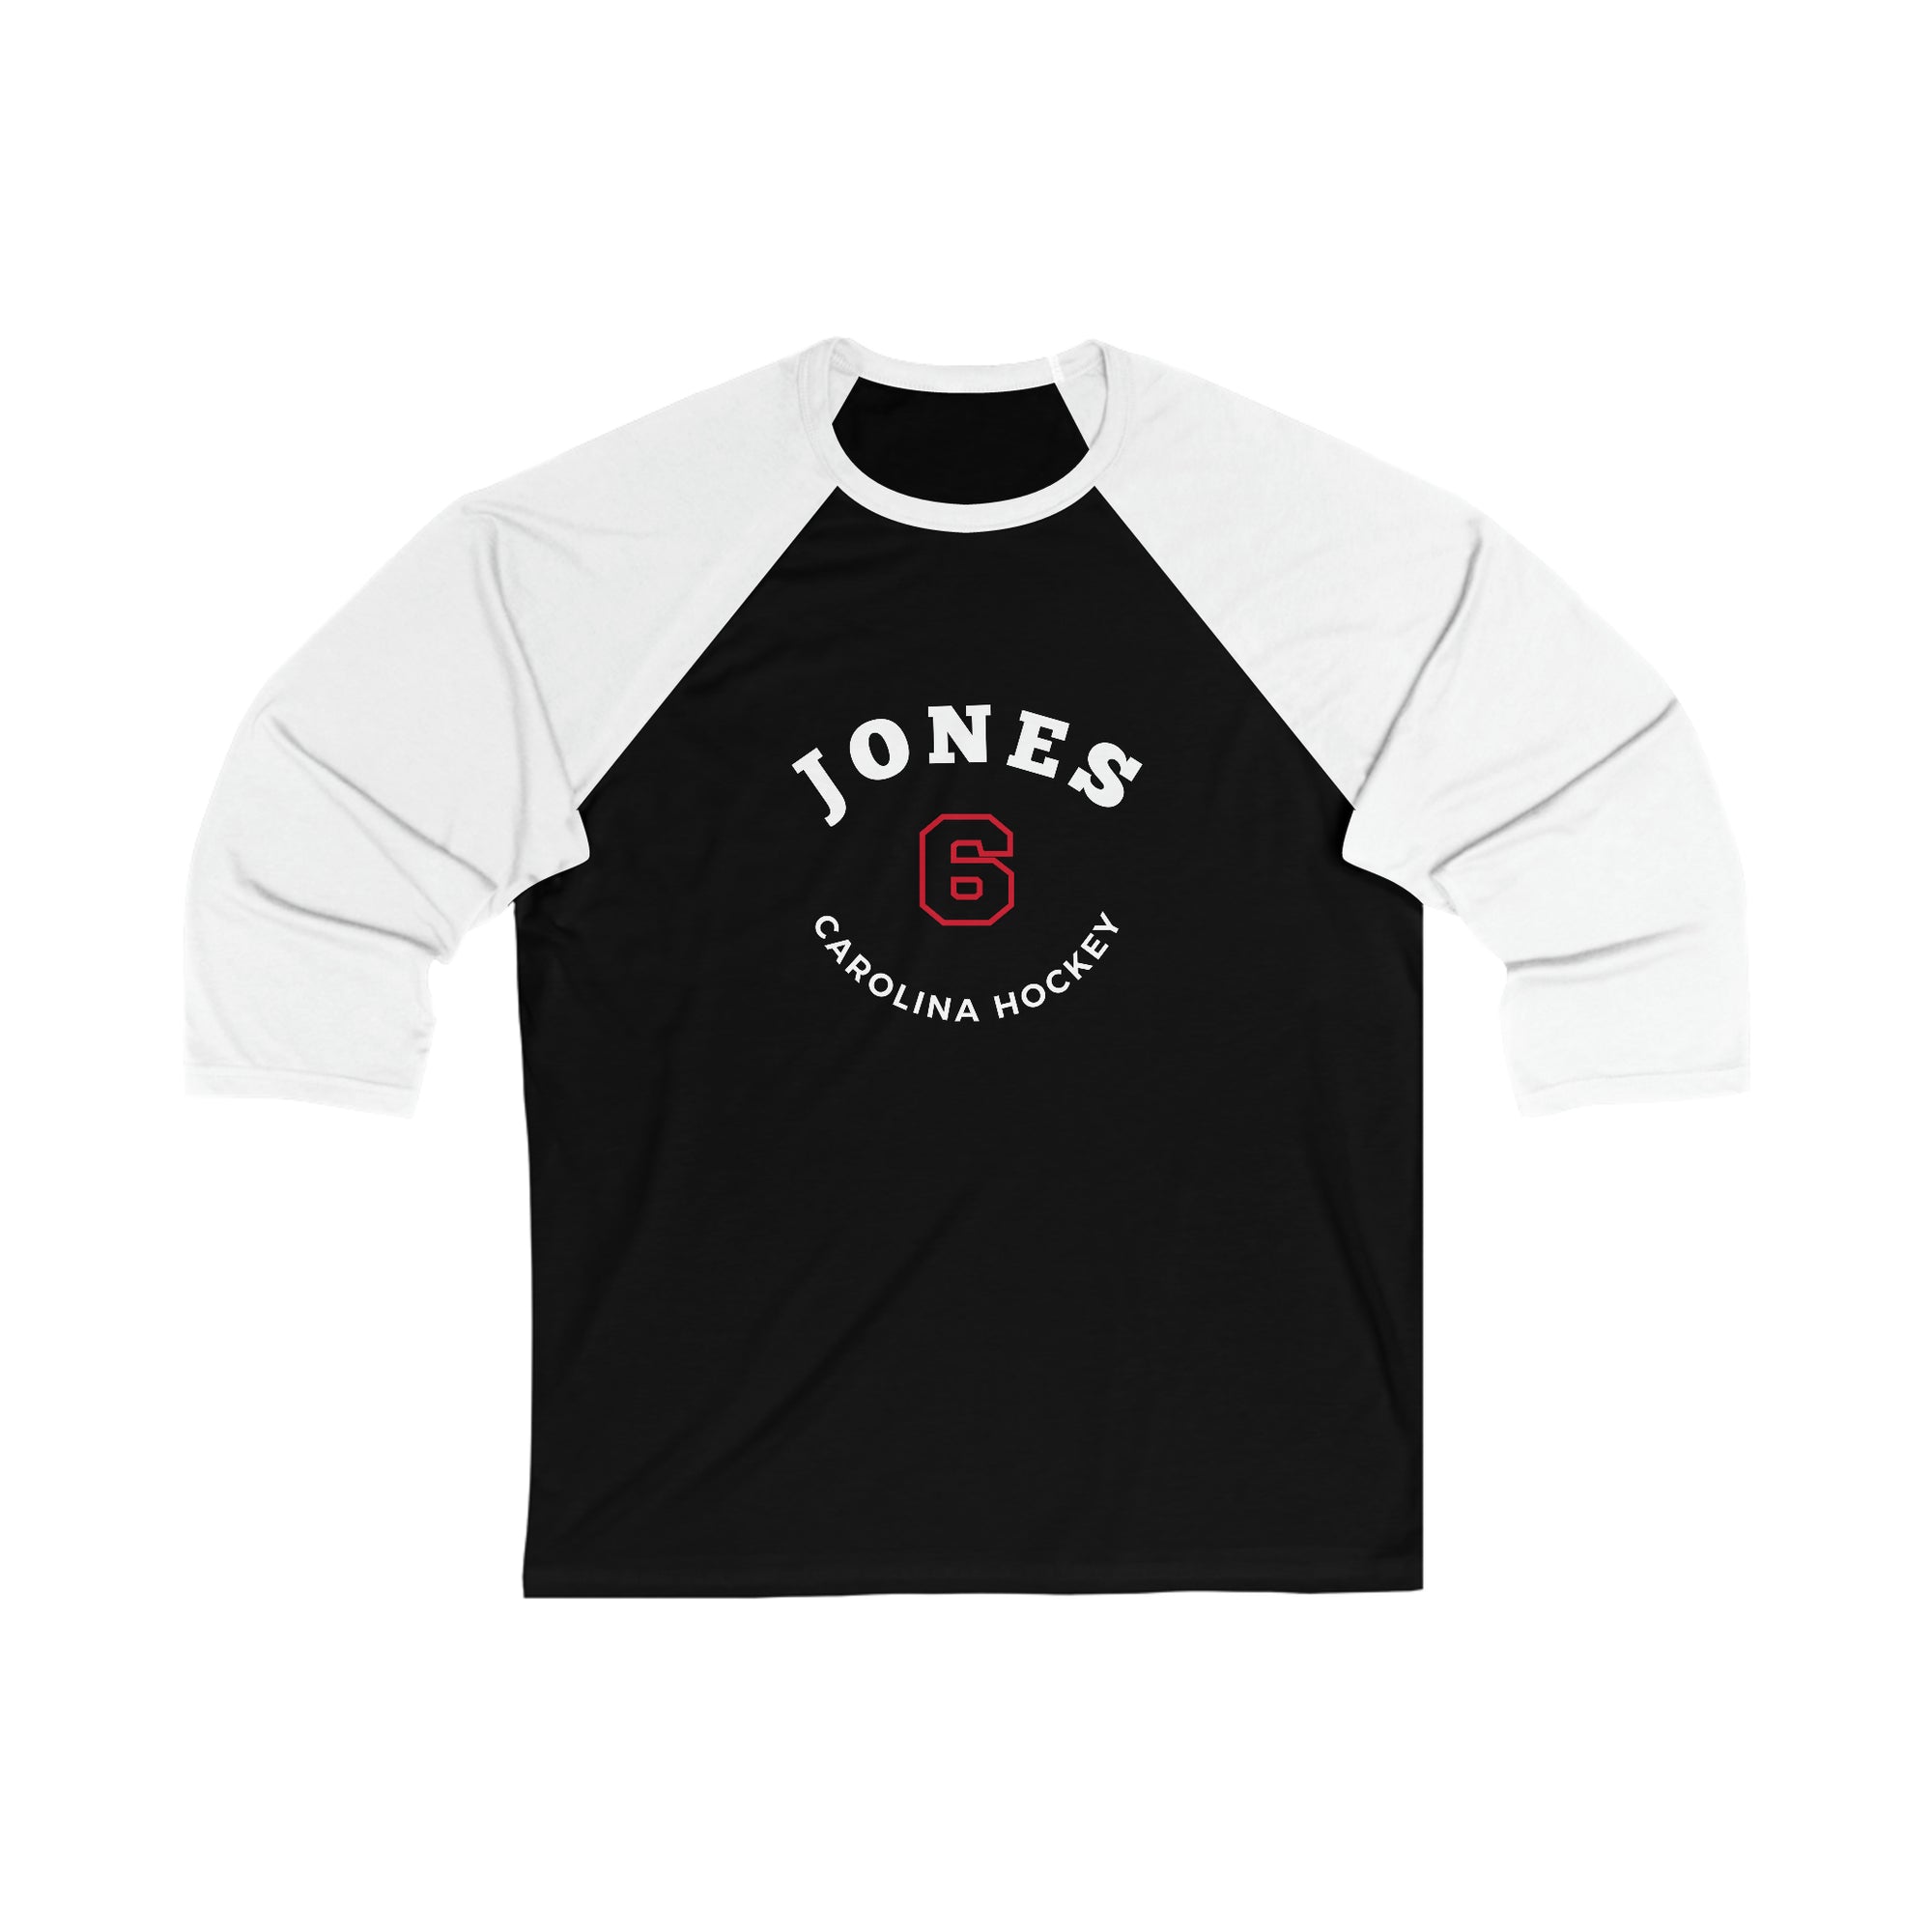 Jones 6 Carolina Hockey Number Arch Design Unisex Tri-Blend 3/4 Sleeve Raglan Baseball Shirt